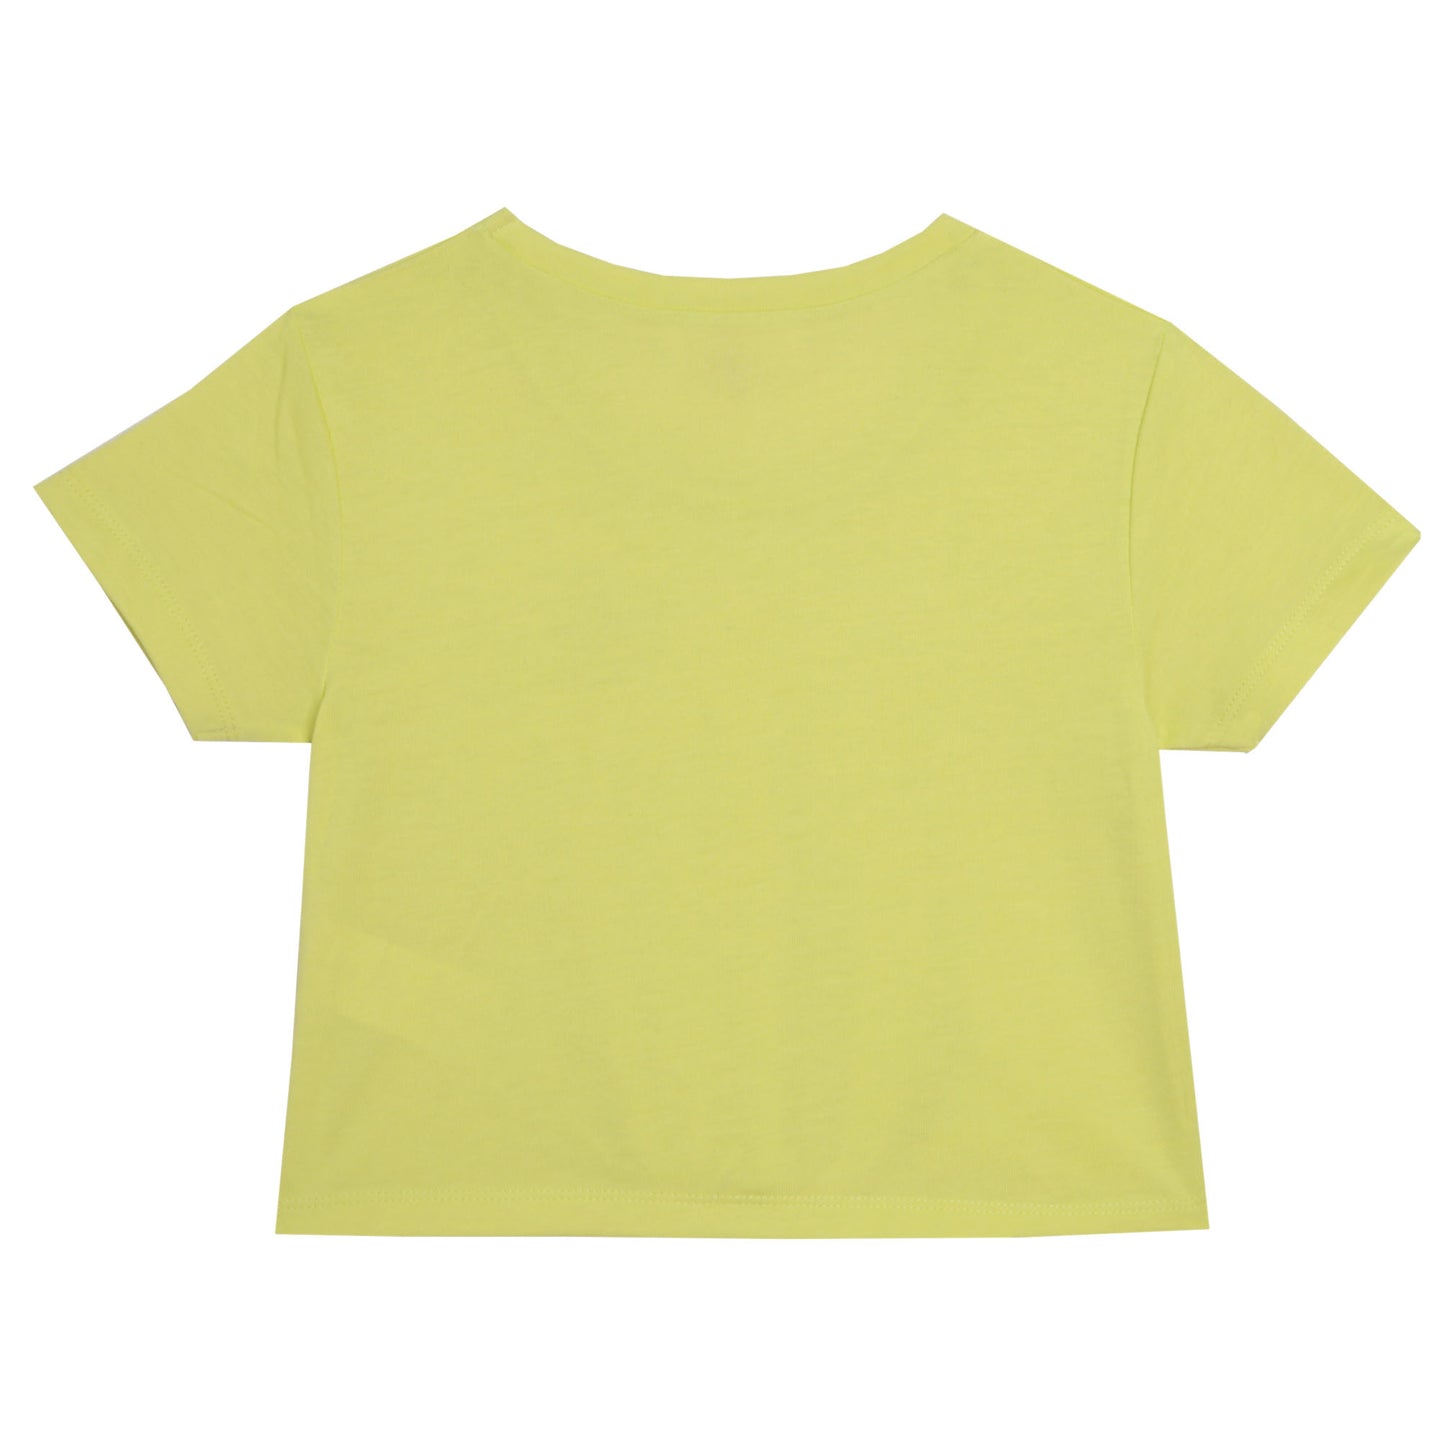 Michael Kors Citreon T shirt